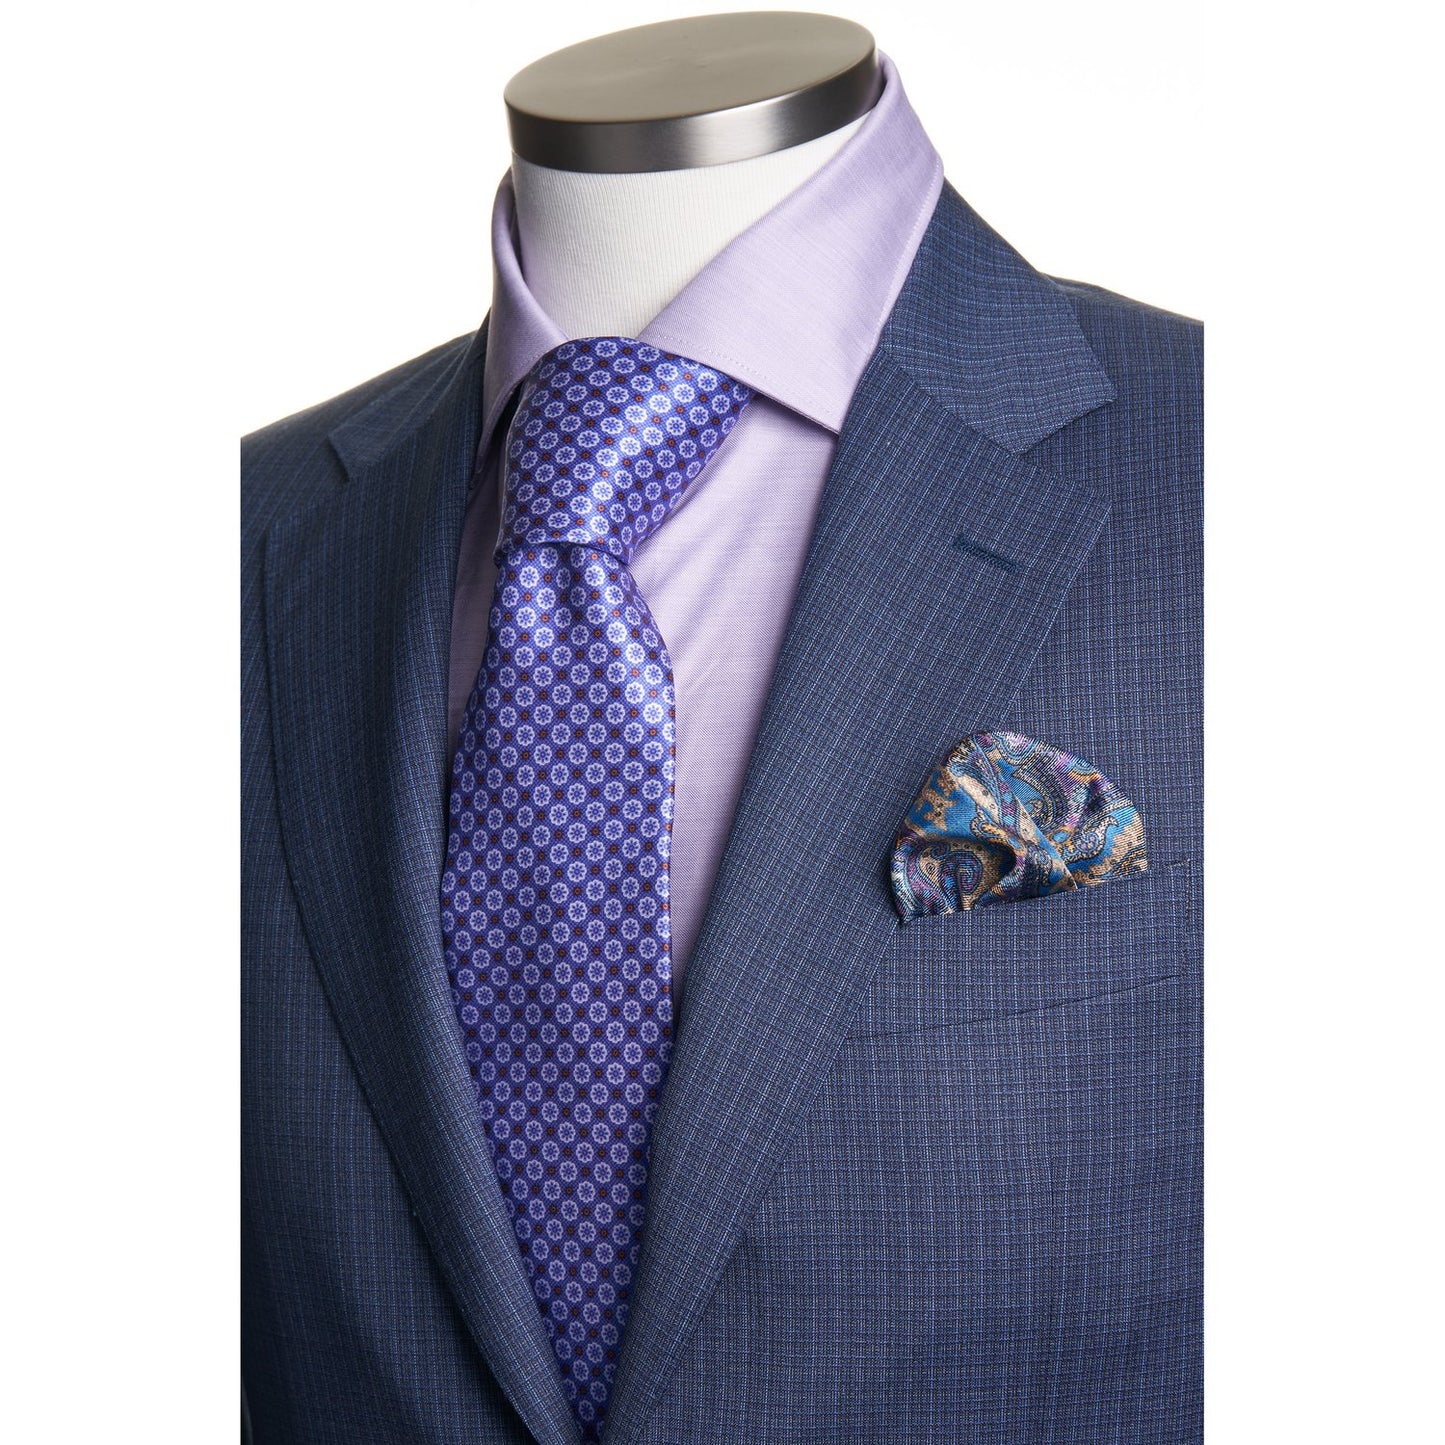 Canali Siena Model Pure Wool Suit in Light Blue